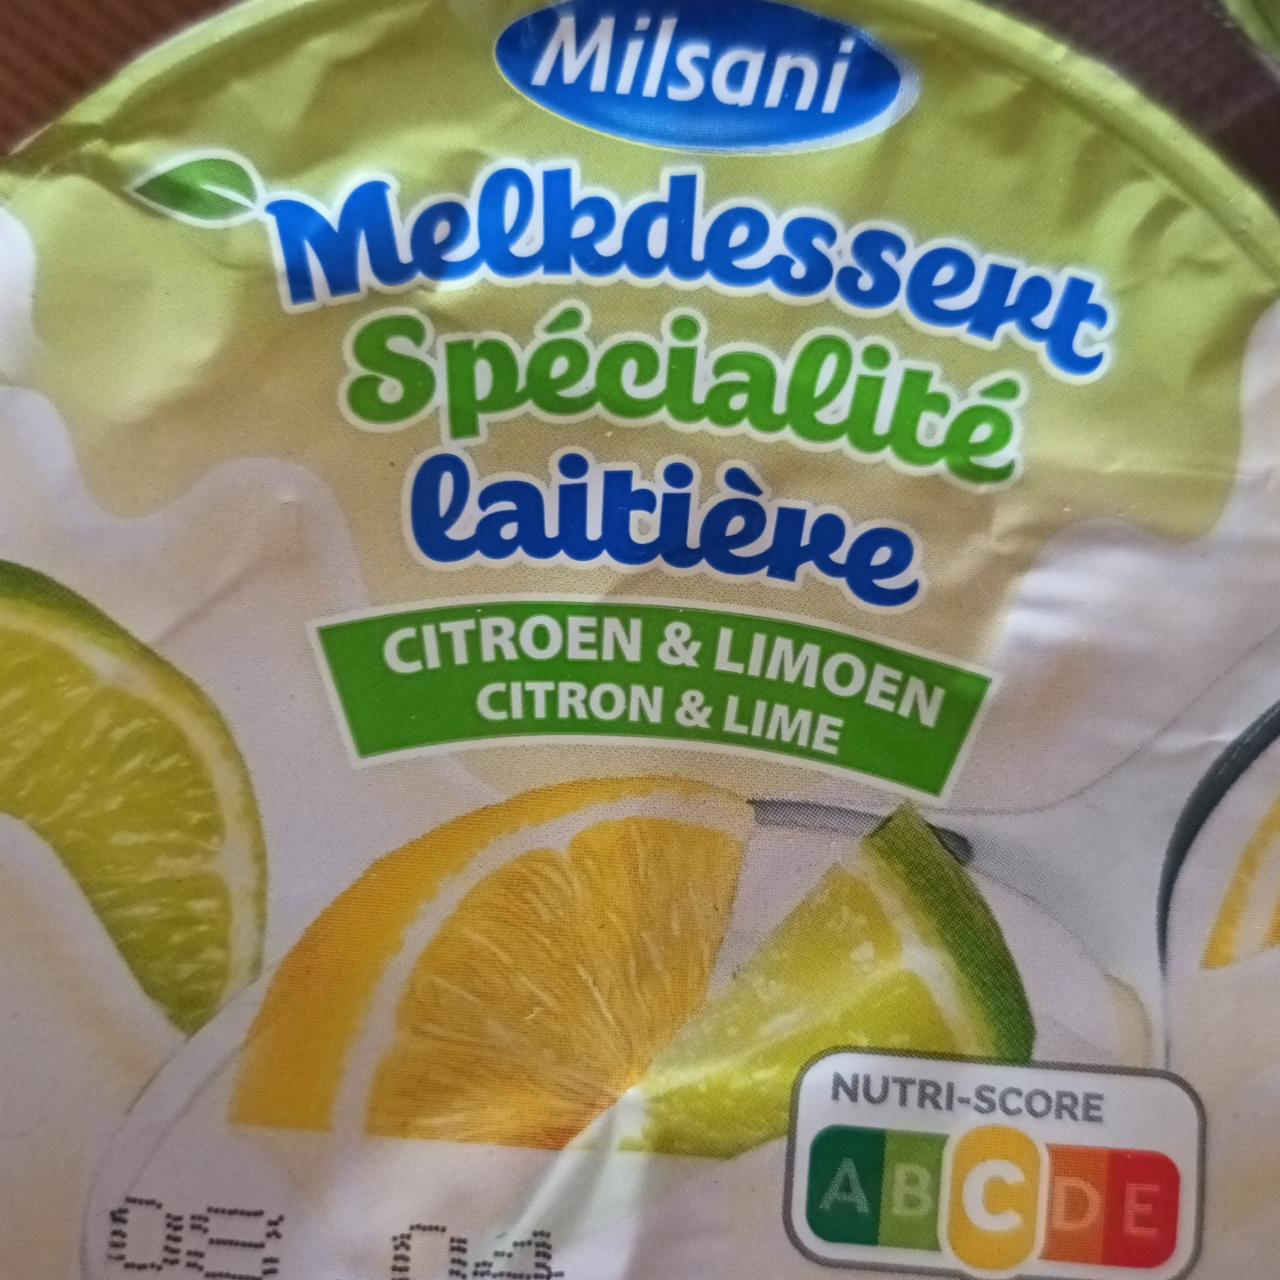 Zdjęcia - Melkdessert Specialite laitiere citroen & limoen Milsani